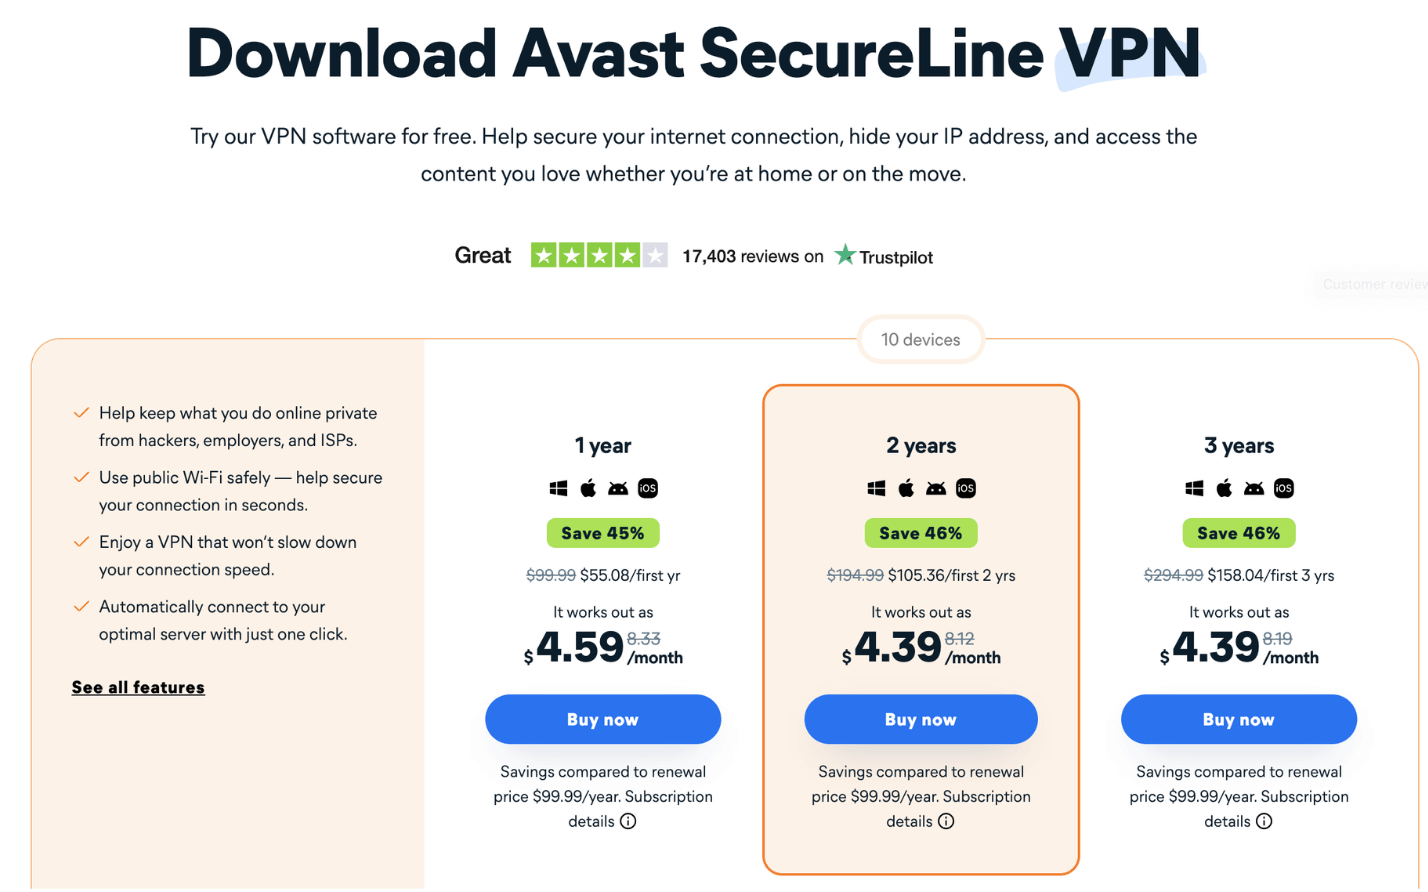 Avast SecureLine VPN free trial